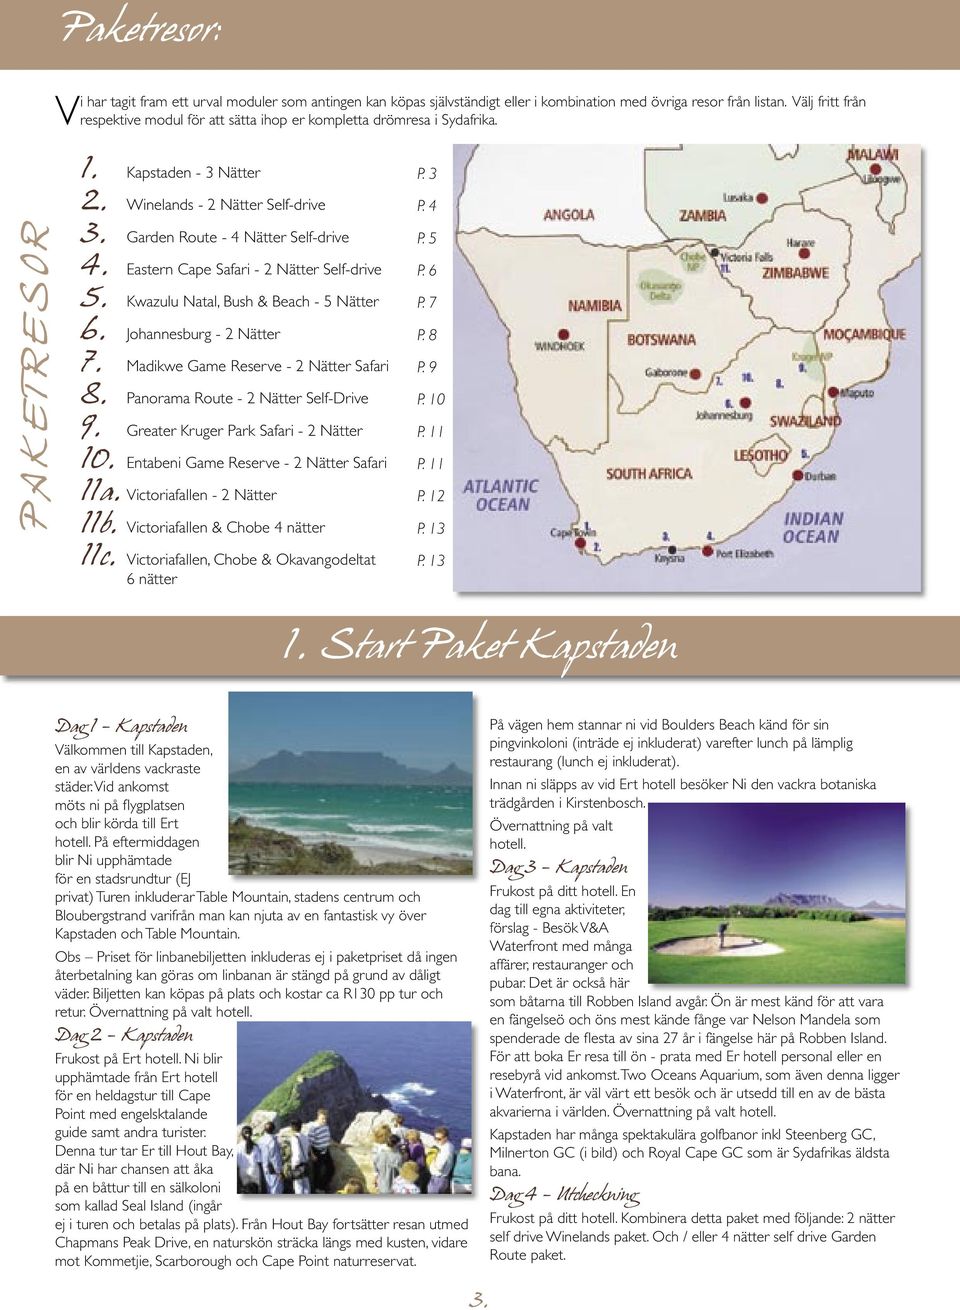 Garden Route - 4 Nätter Self-drive 4. Eastern Cape Safari - 2 Nätter Self-drive 5. Kwazulu Natal, Bush & Beach - 5 Nätter 6. Johannesburg - 2 Nätter 7. Madikwe Game Reserve - 2 Nätter Safari 8.